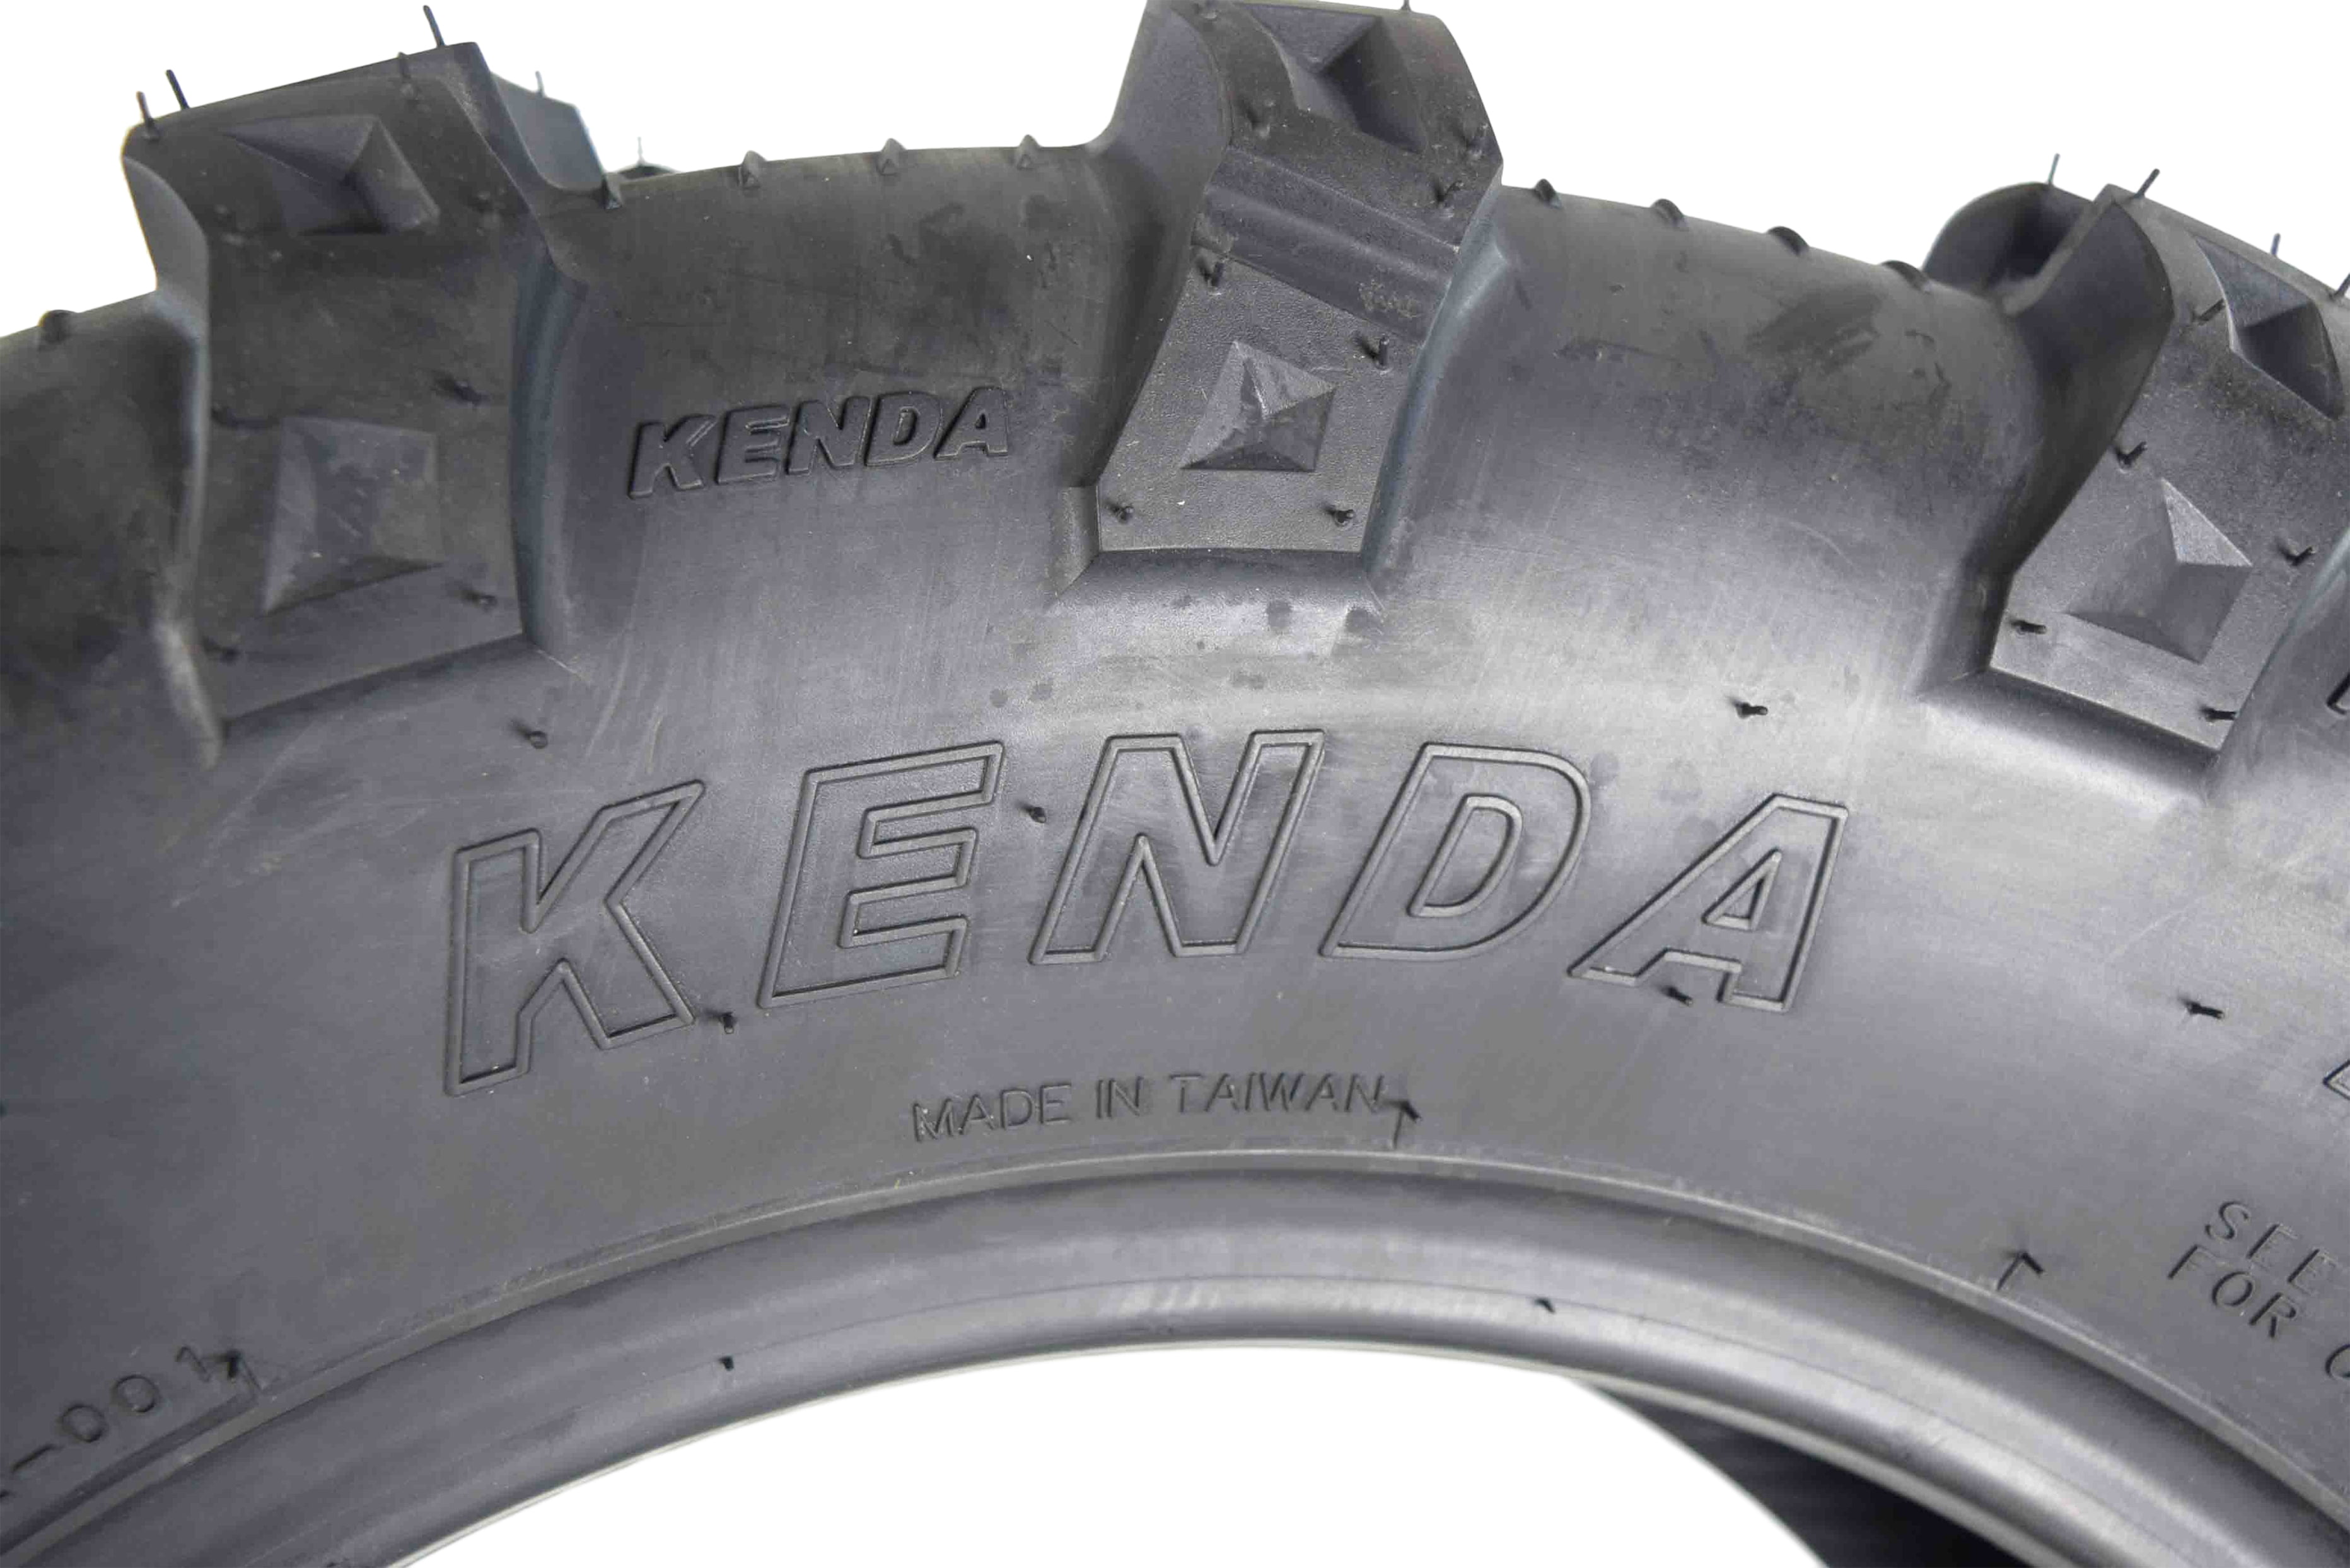 Kenda Bear Claw EVO  25x10-12 Rear ATV/UTV Tires 2 Pack w Bottle Opener Keychain 